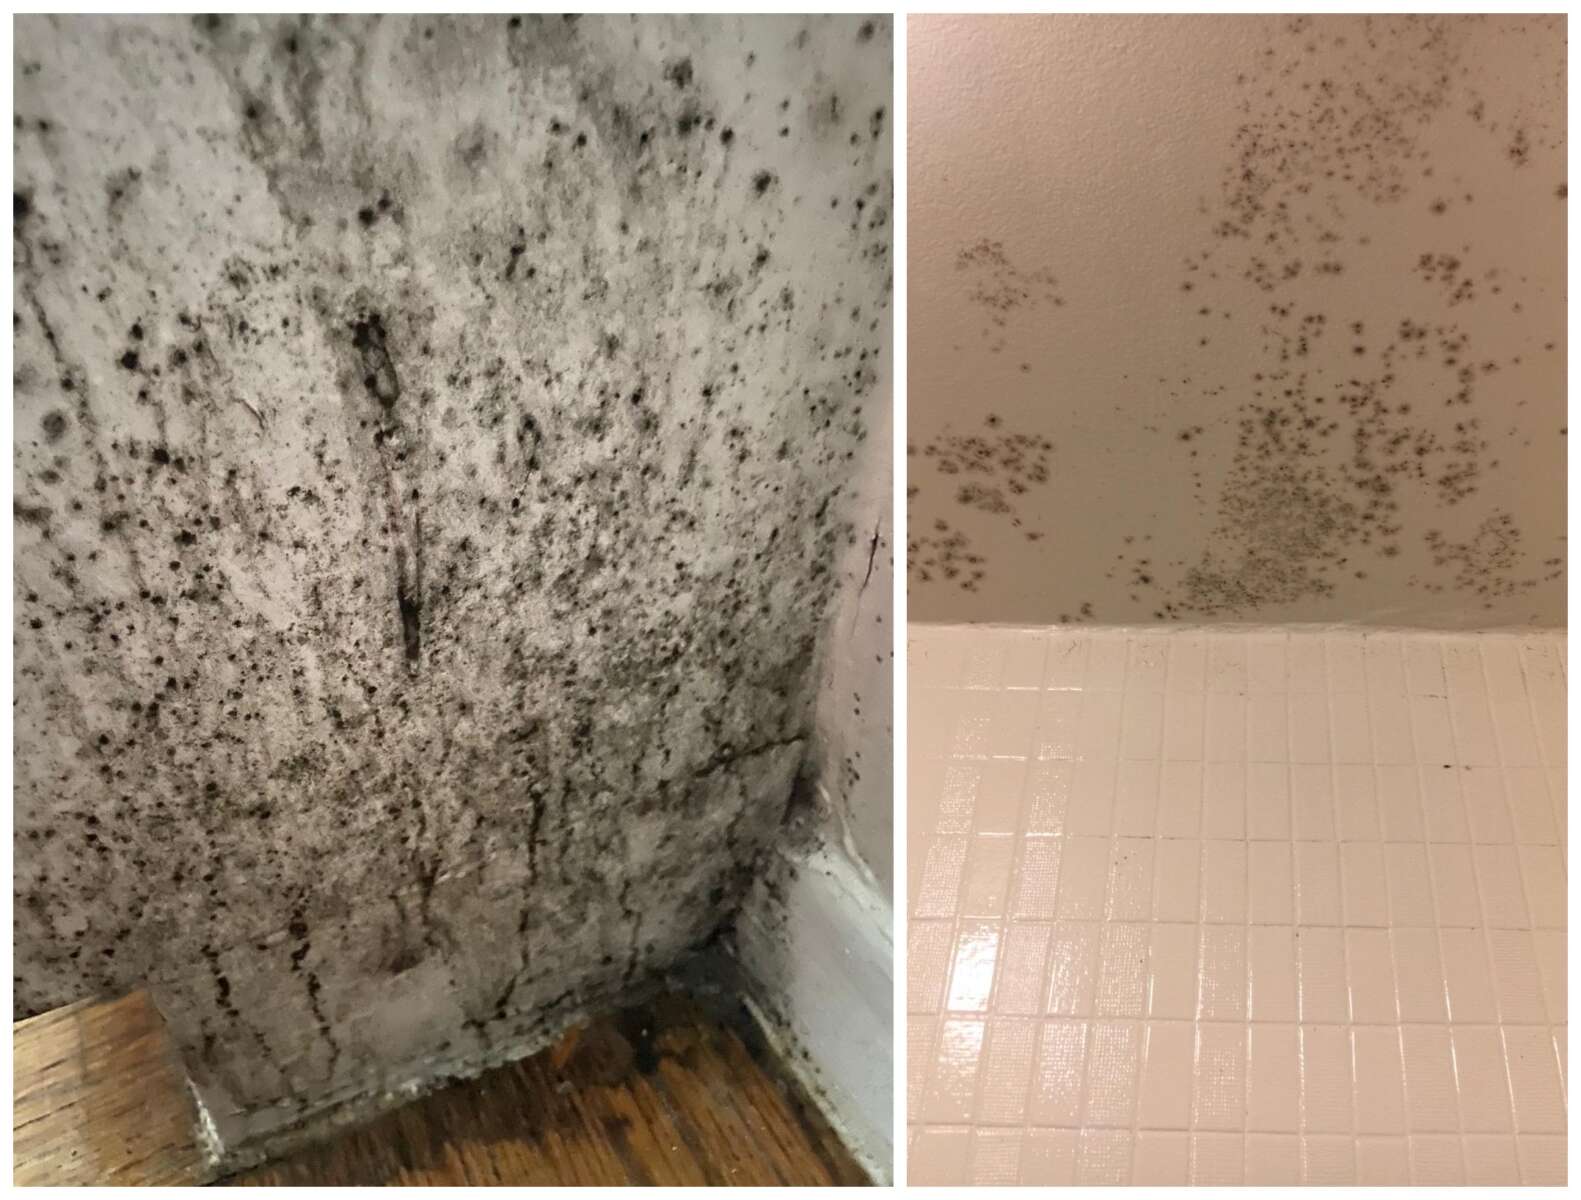 Rodents Mold Shoddy Maintenance Plague Affordable Apartment Building Arlington Texas Eminetra